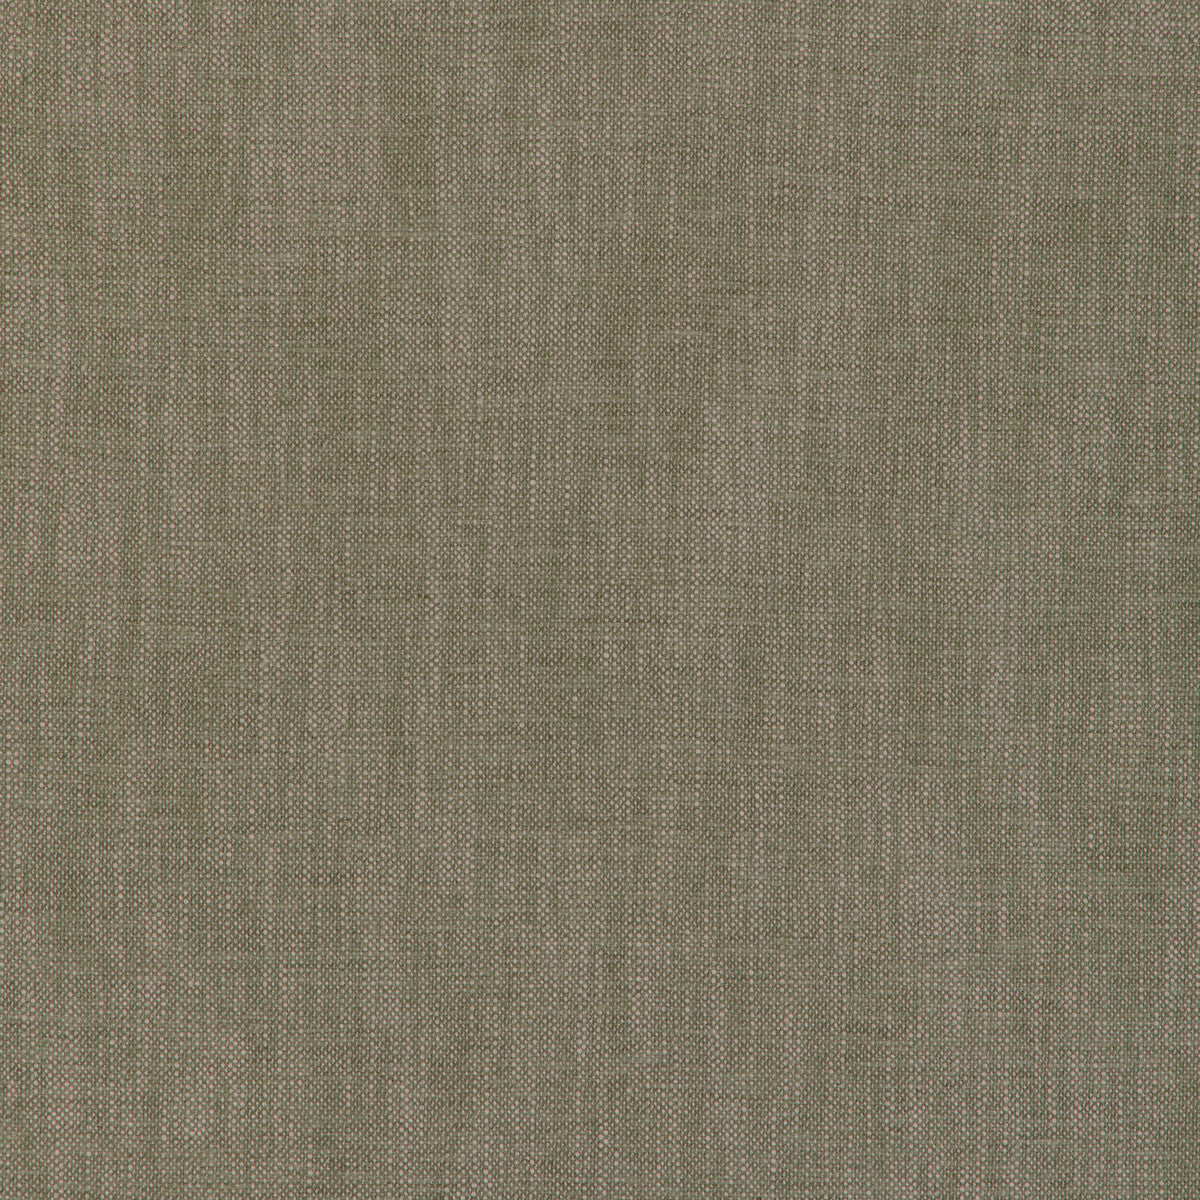 Kravet Smart fabric in 36672-23 color - pattern 36672.23.0 - by Kravet Smart in the Performance Kravetarmor collection